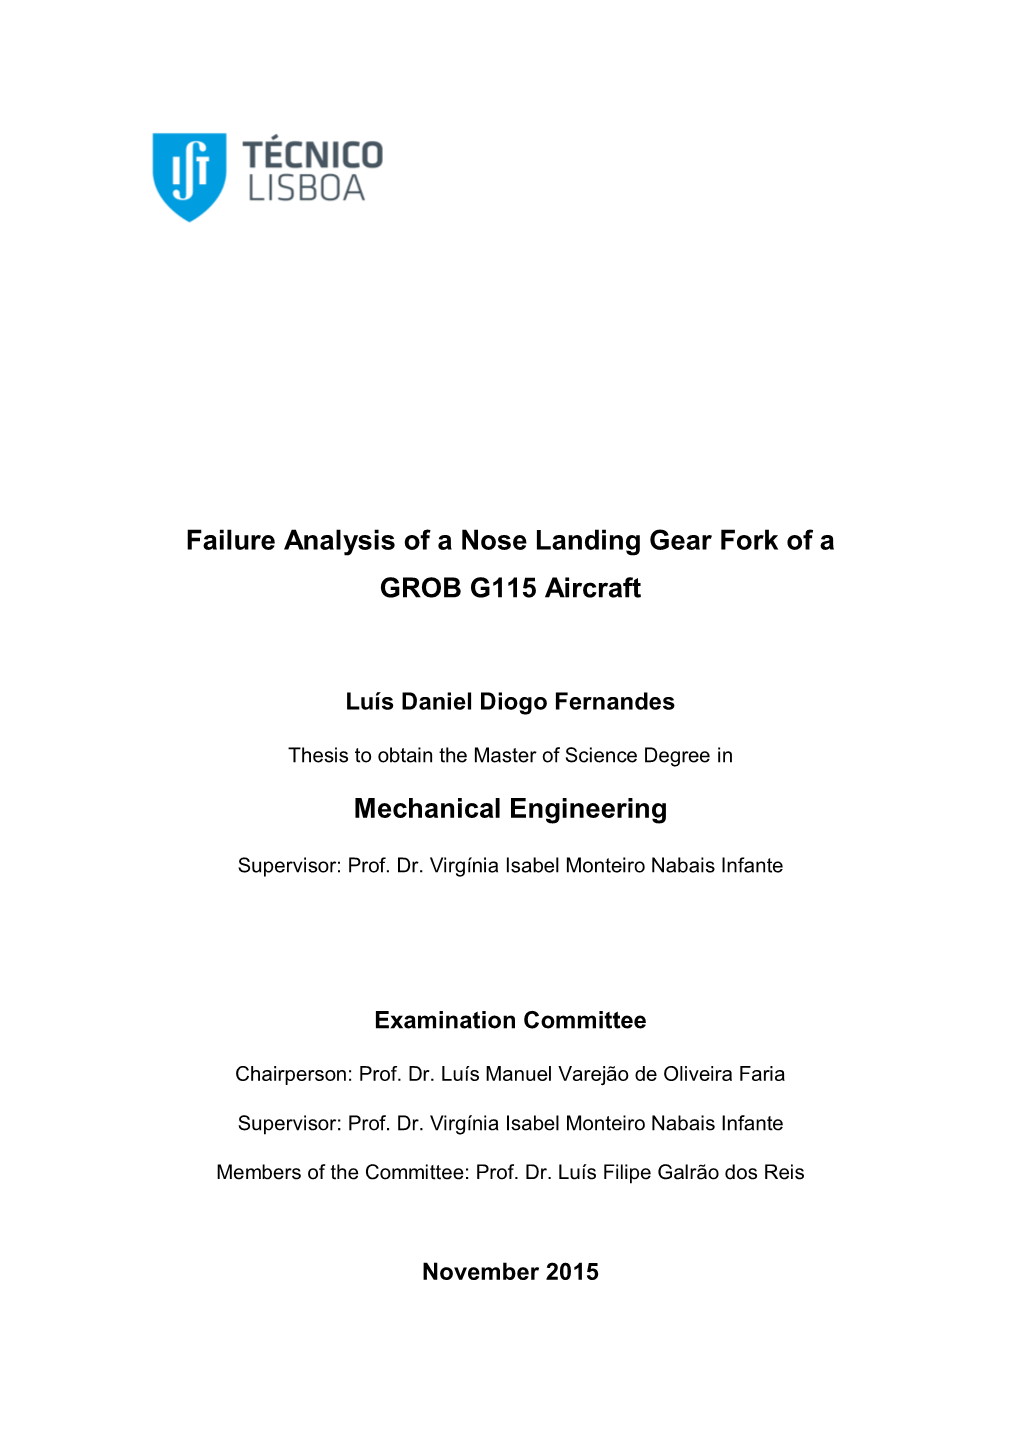 Failure Analysis of a Nose Landing Gear Fork of a GROB G115 Aircraft